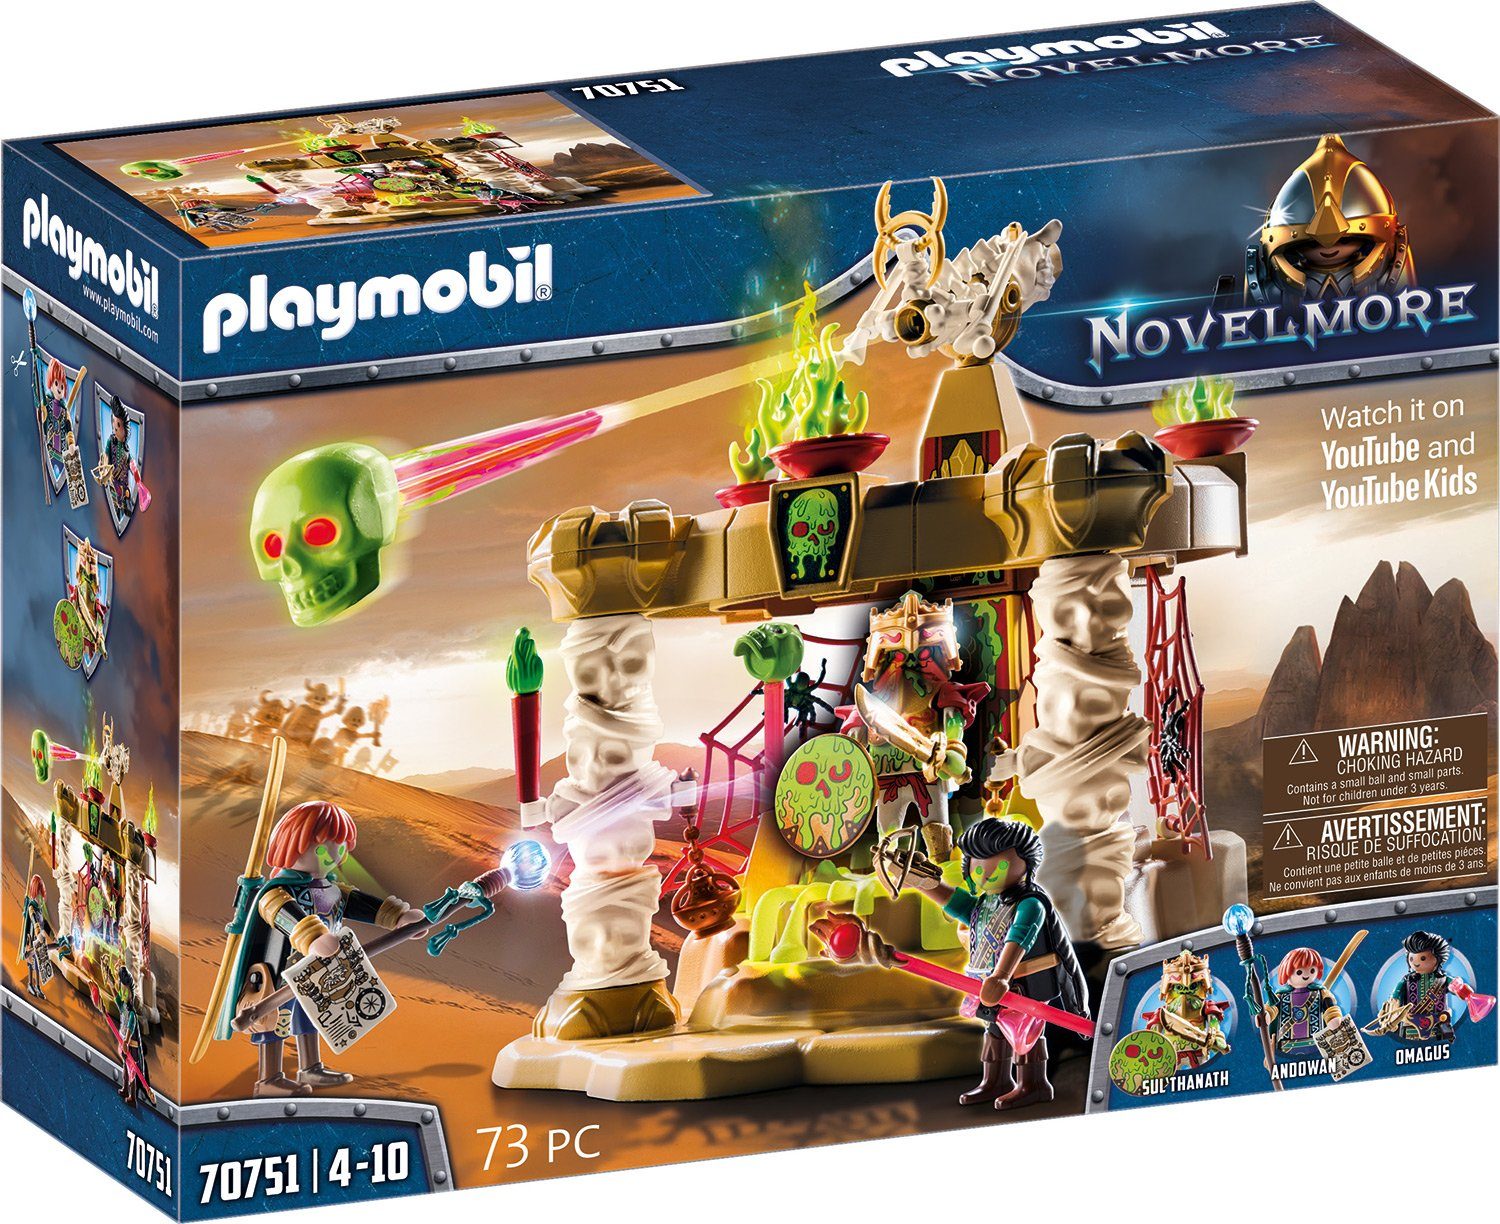 Playmobil Novelmore online kaufen | OTTO